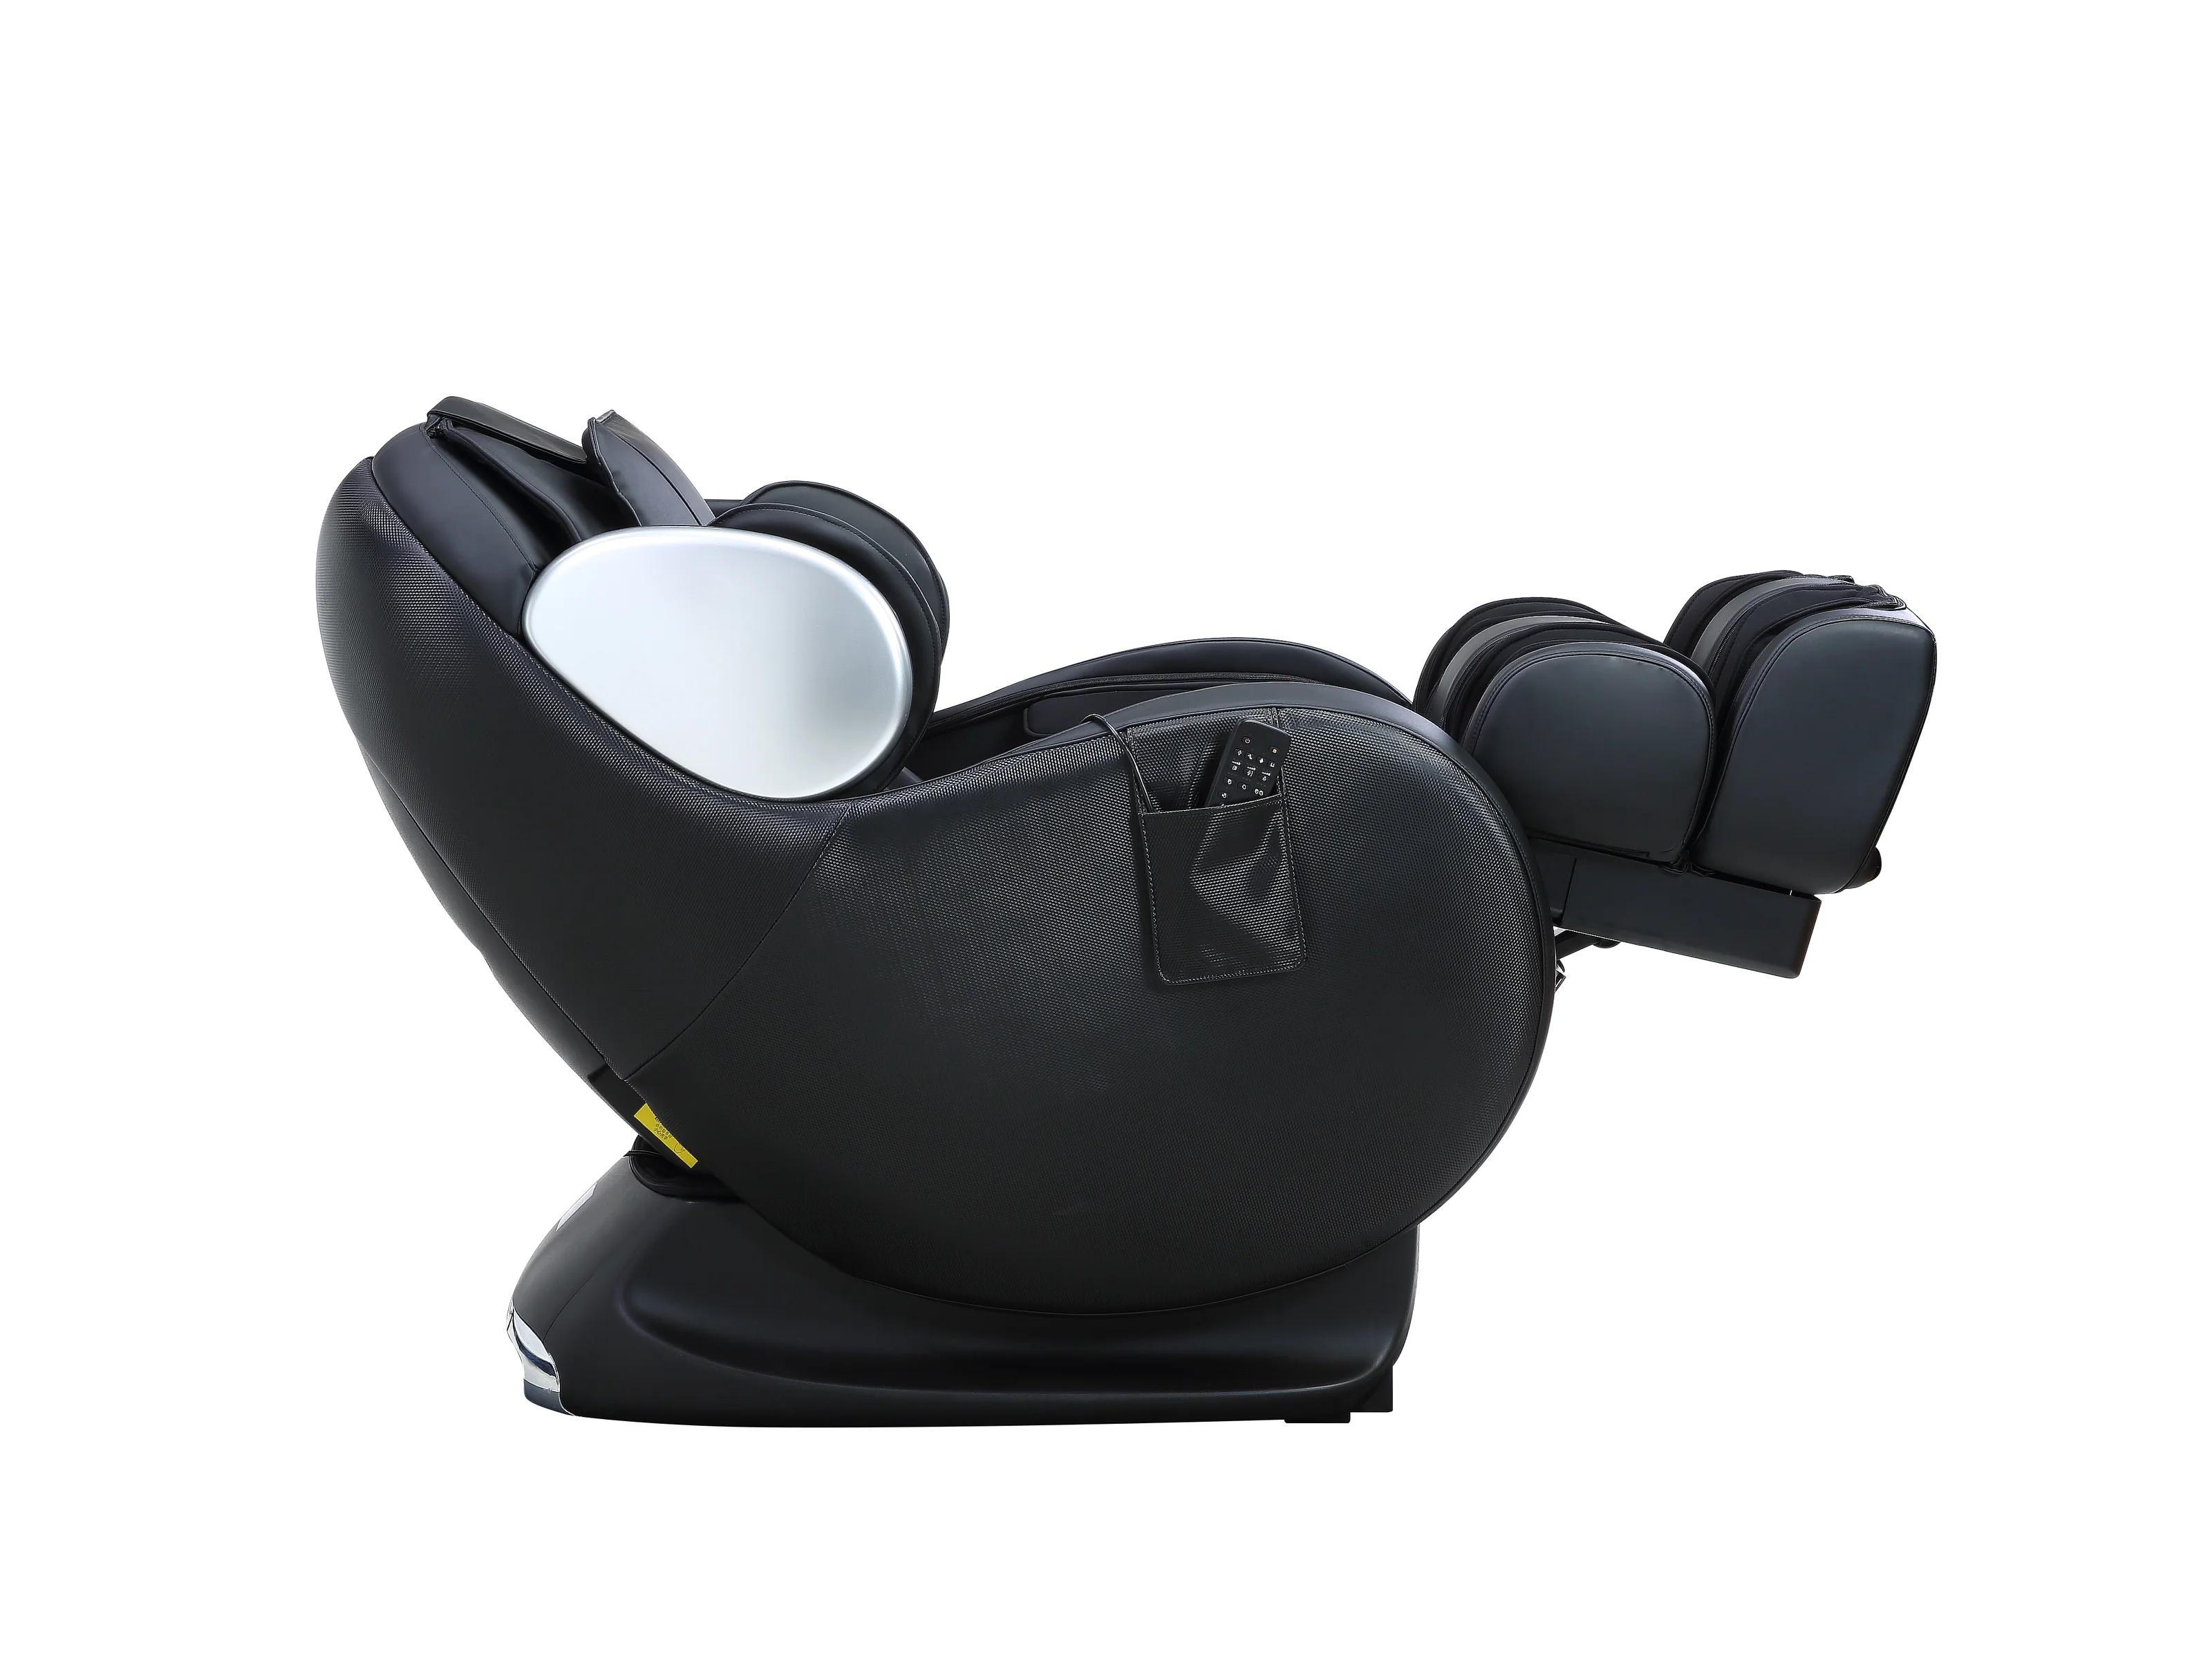 

    
Pacari Massage Chair
